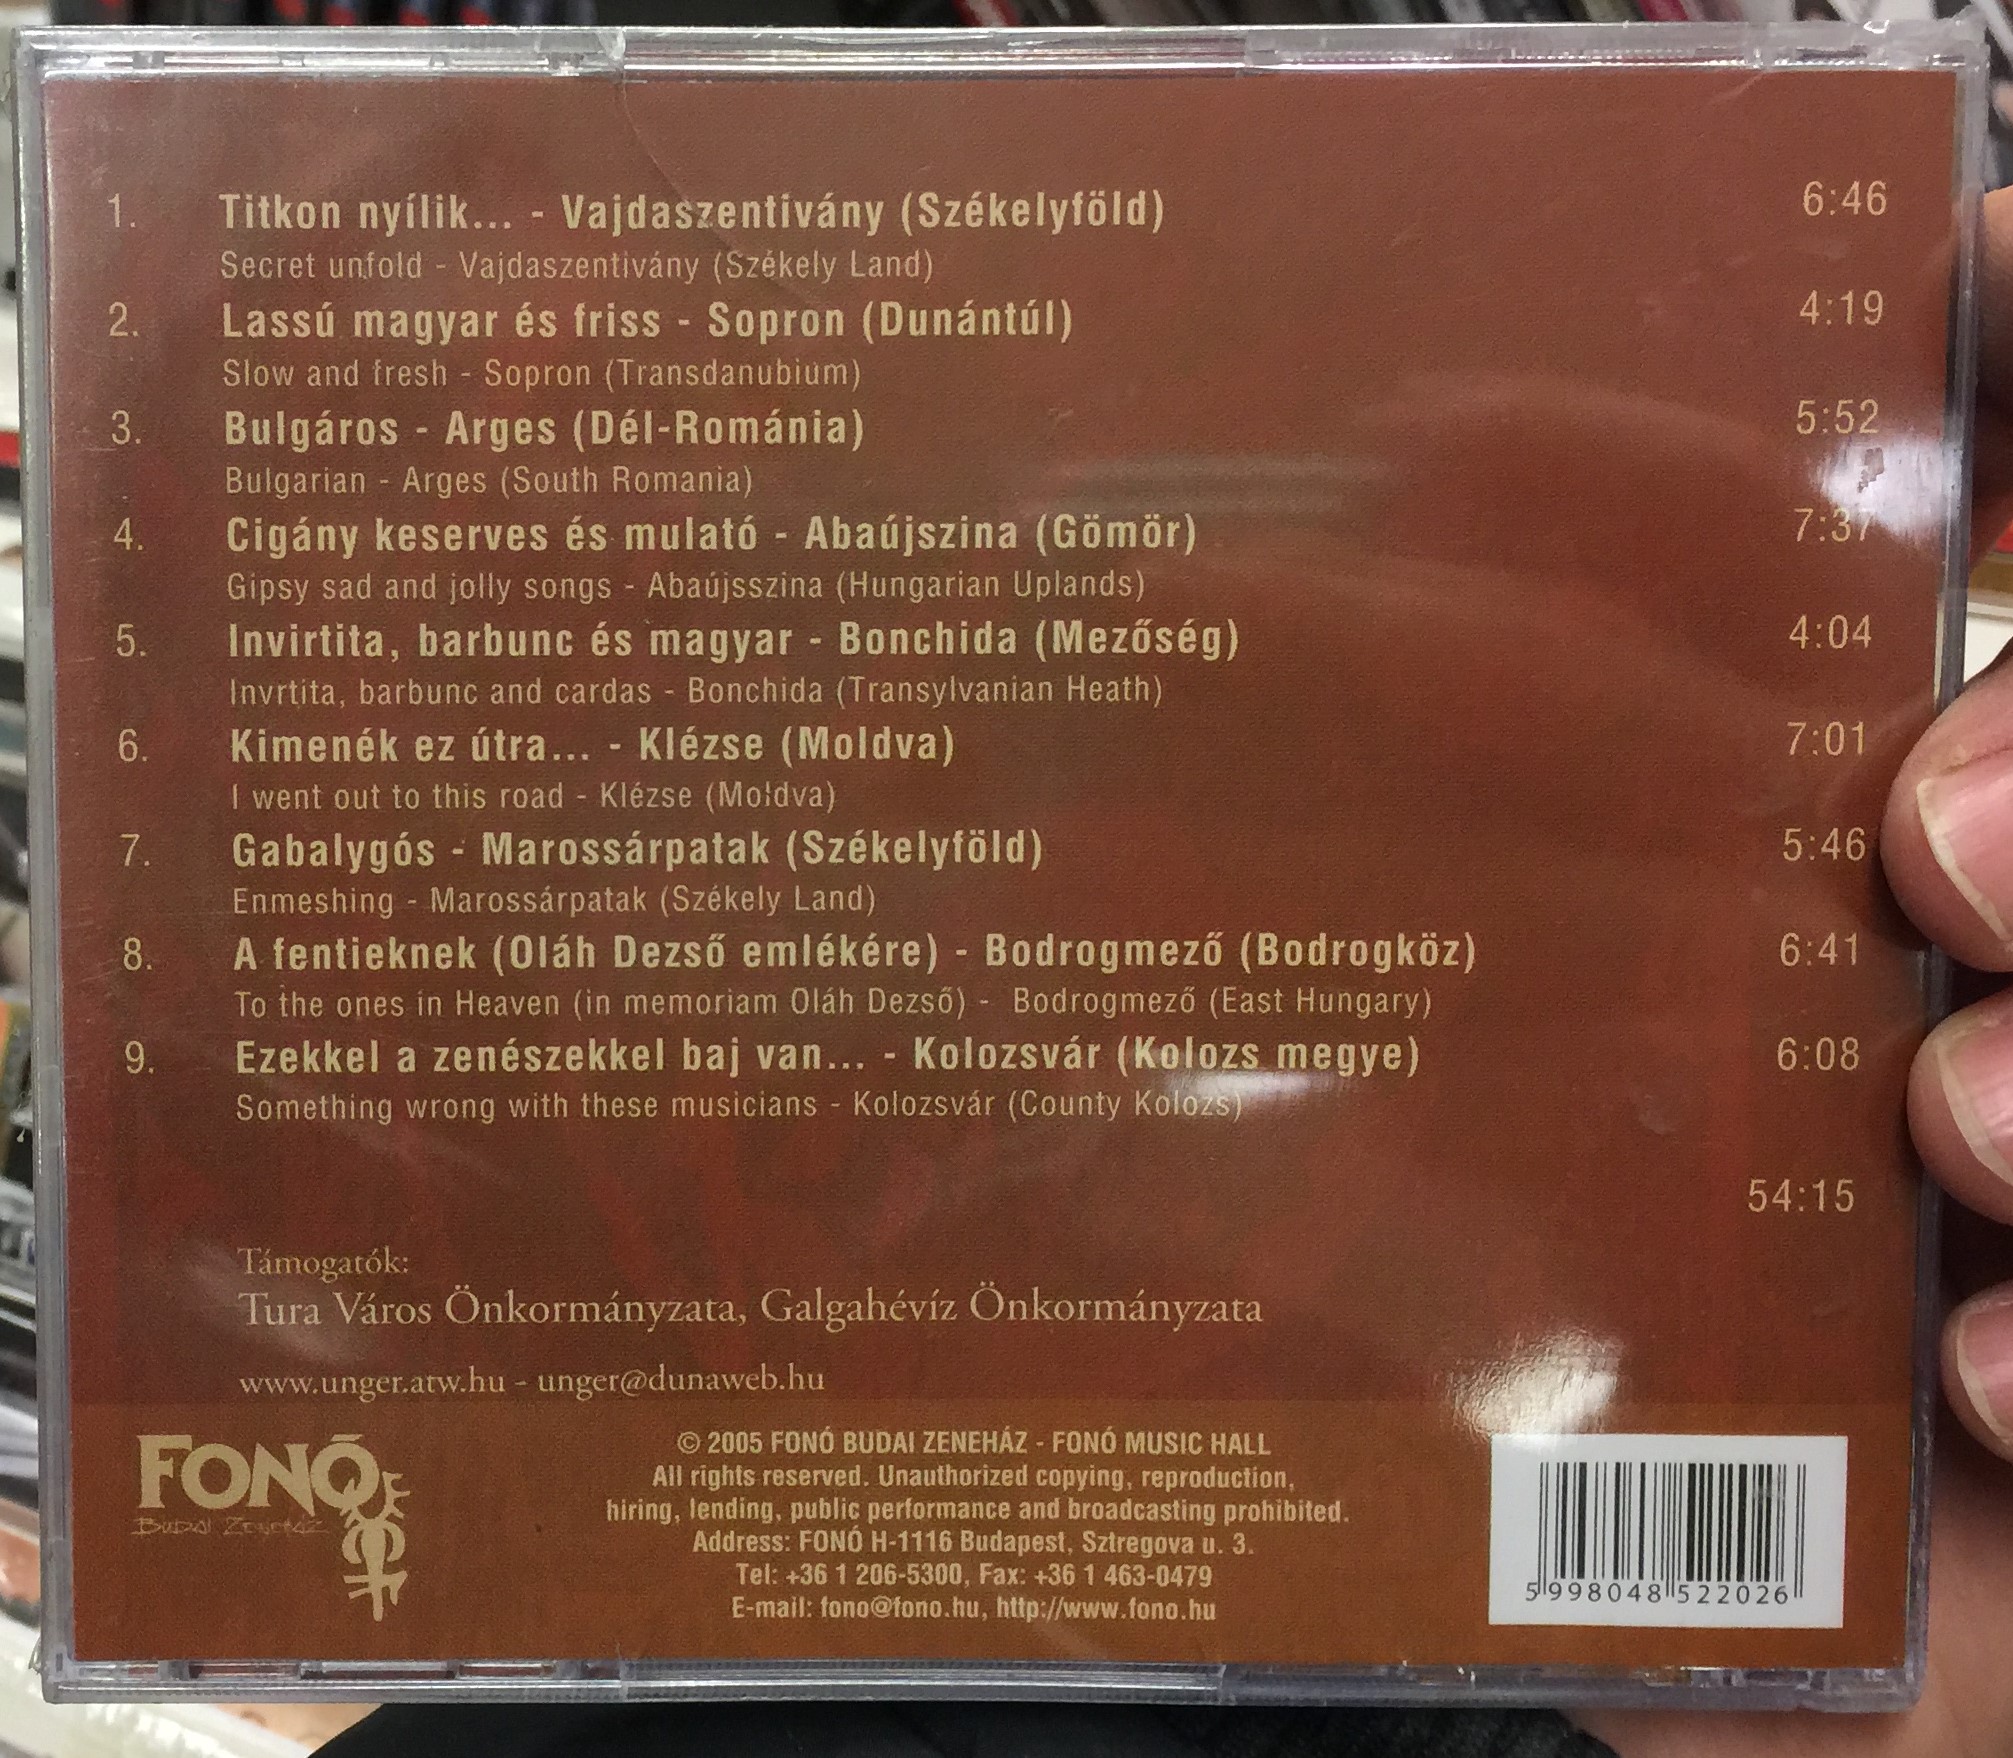 unger-balazs-es-baratai-masodik-fordulo-cimbalommuzsika-magyarorszagrol-es-a-balkanrol-cimbalom-music-from-hungary-and-the-balkan-countries-fono-budai-zenehaz-audio-cd-2005-599804852202.jpg